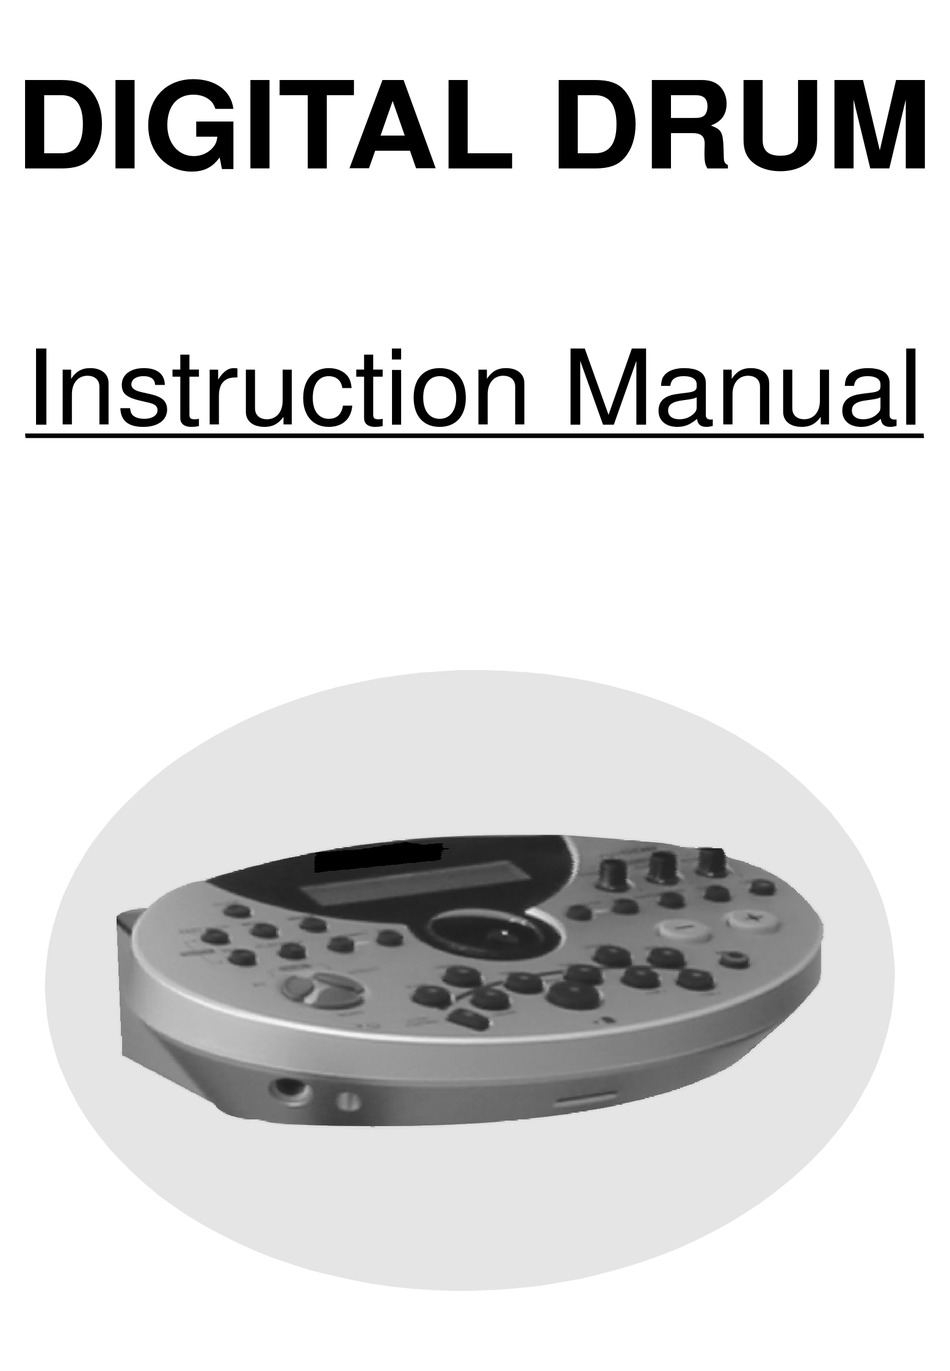 MEDELI DIGITAL DRUM INSTRUCTION MANUAL Pdf Download | ManualsLib